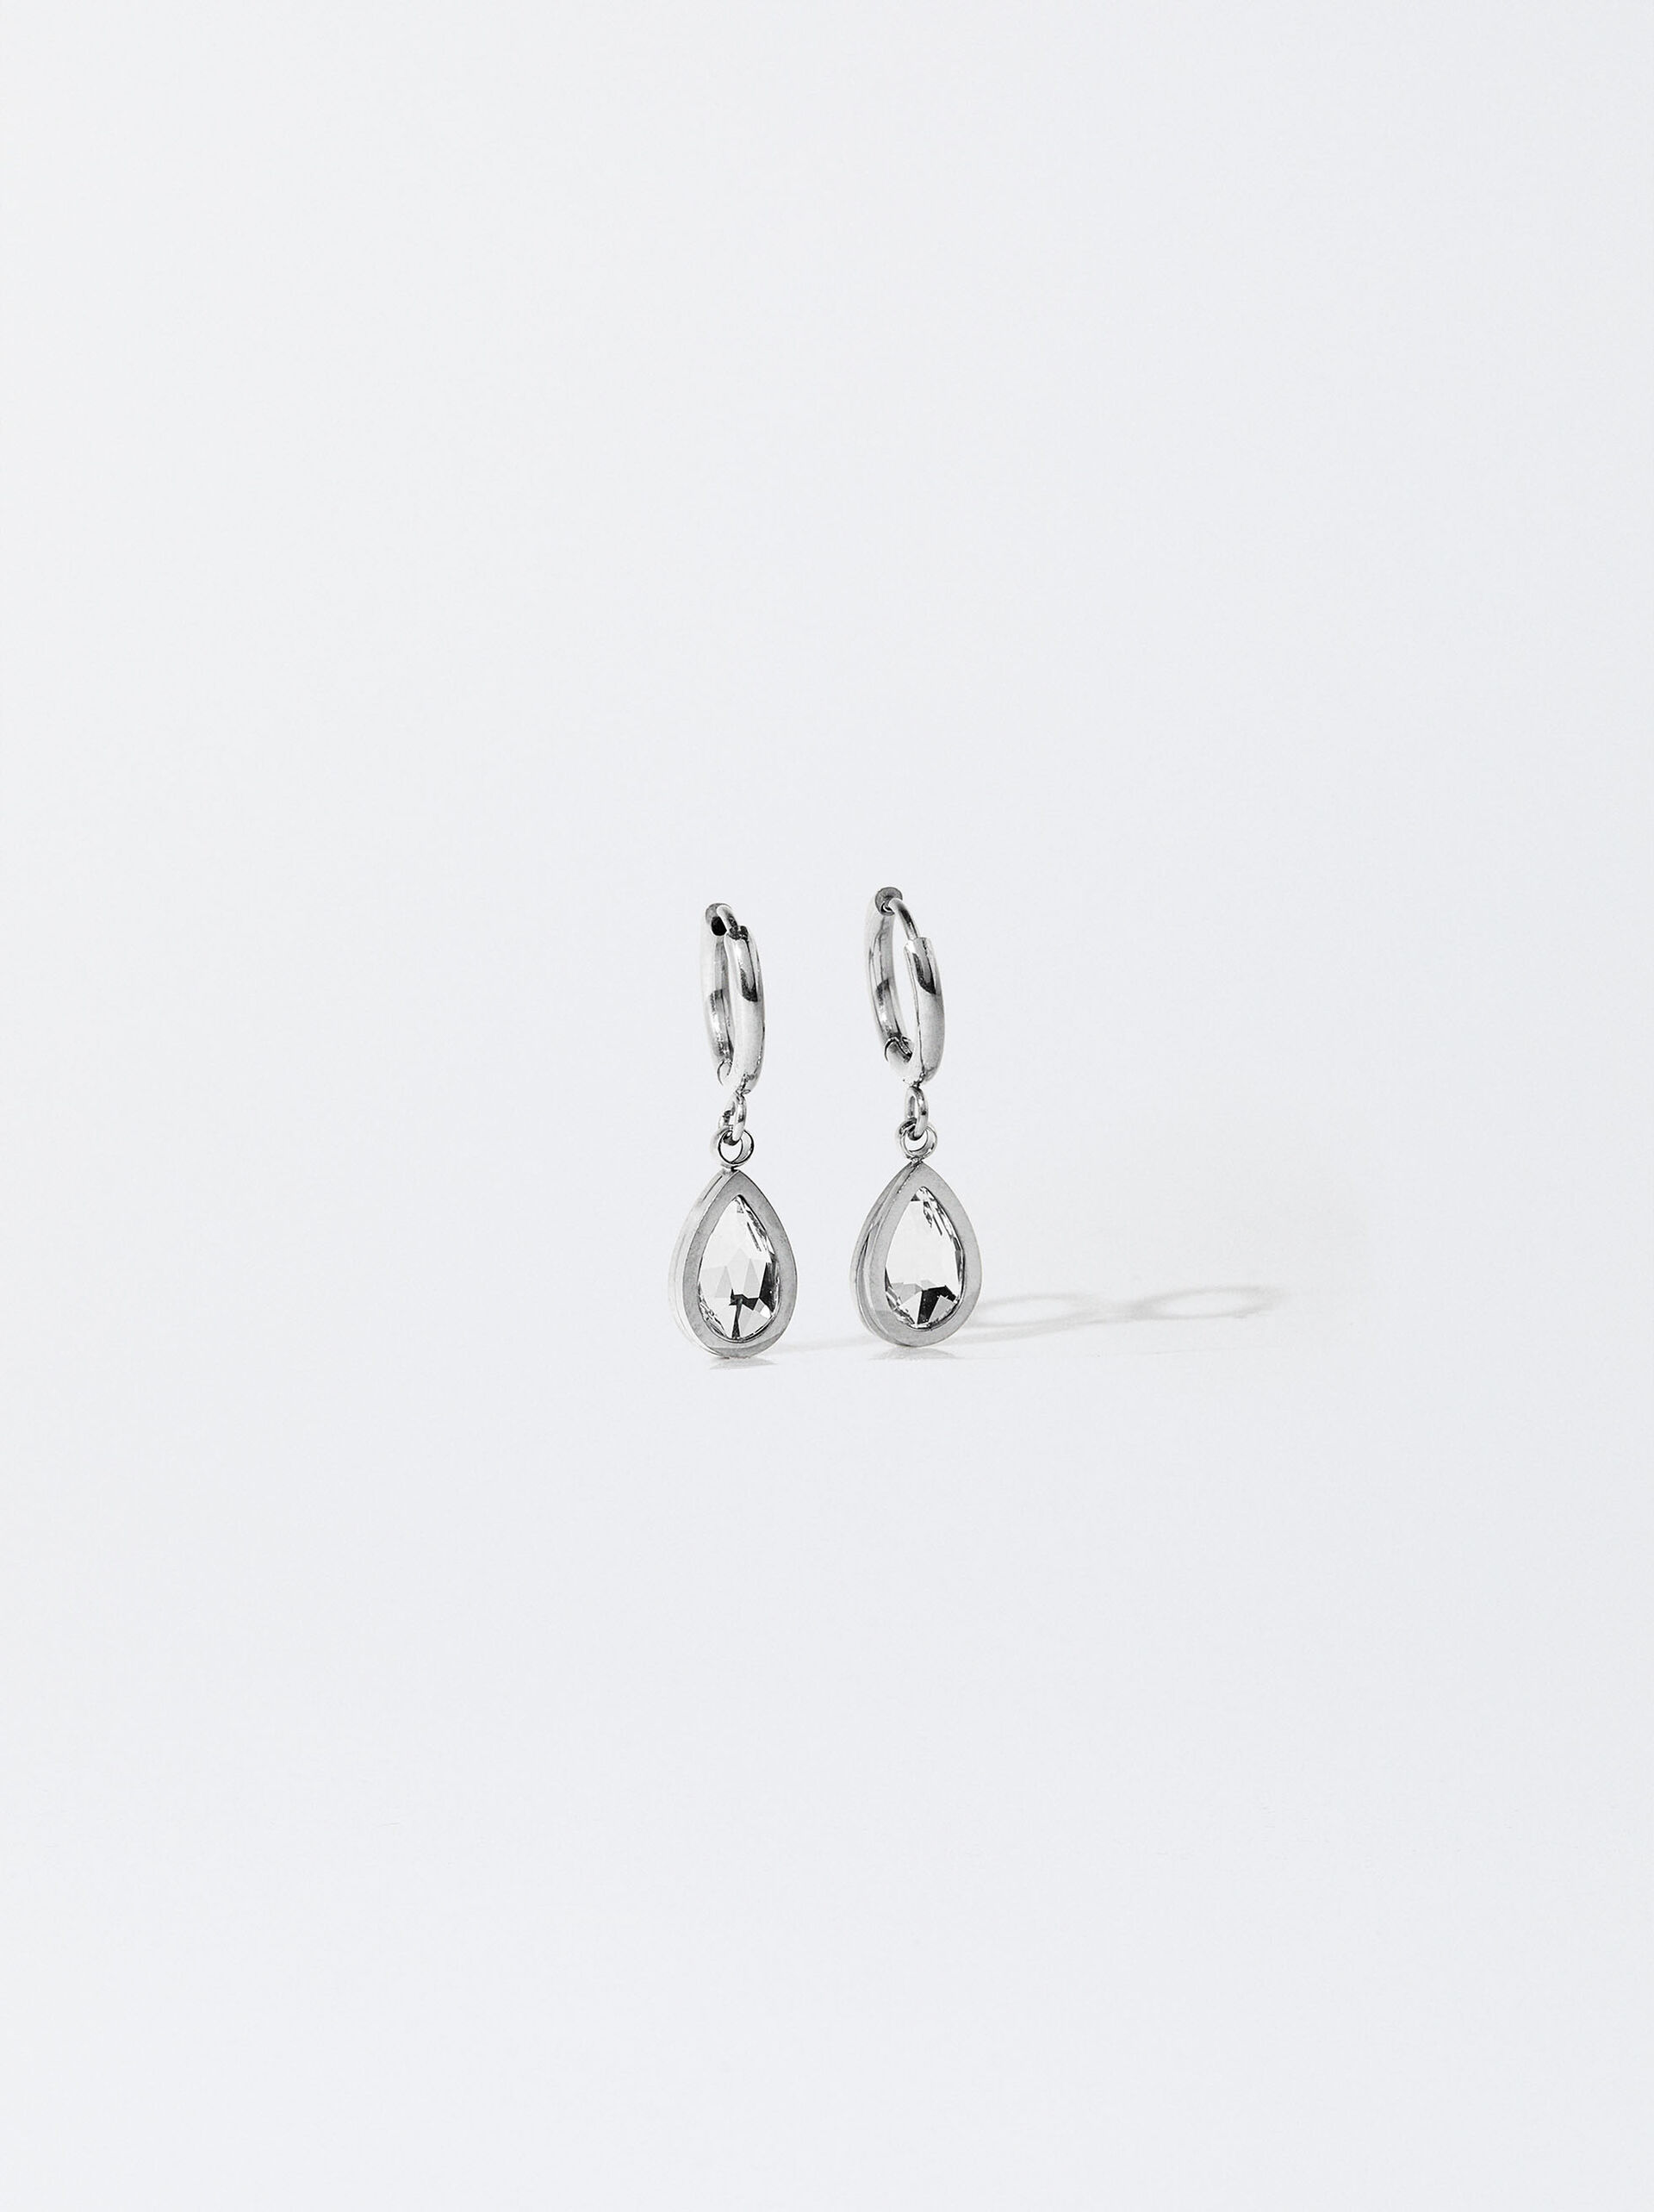 Stainless Steel Hoop Earrings With Crystals image number 0.0